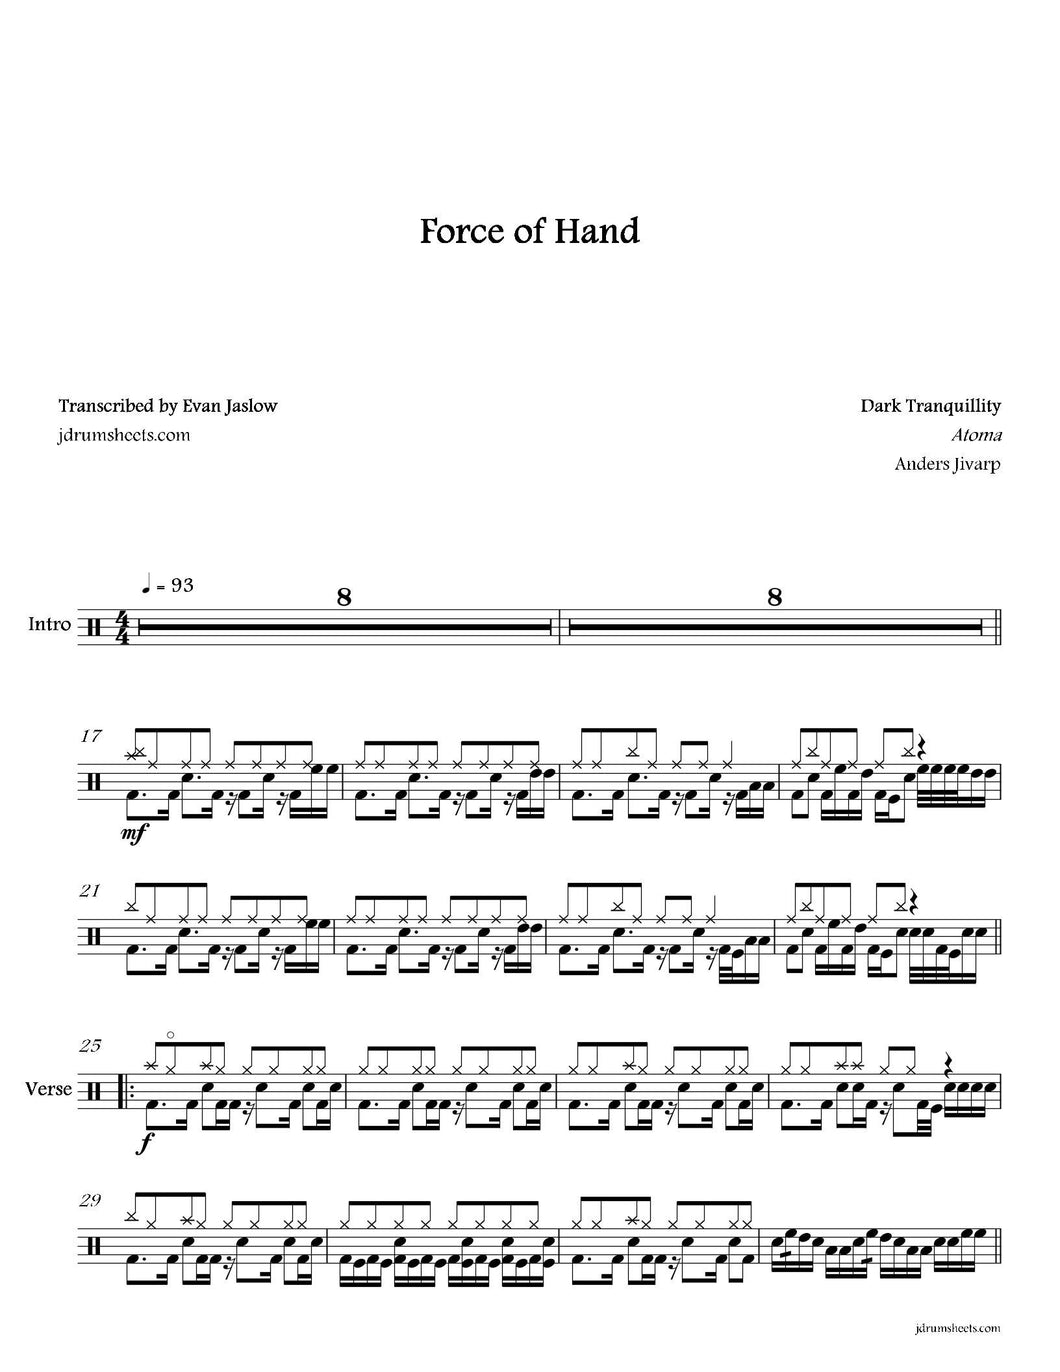 Force of Hand - Dark Tranquillity - Full Drum Transcription / Drum Sheet Music - Jaslow Drum Sheets